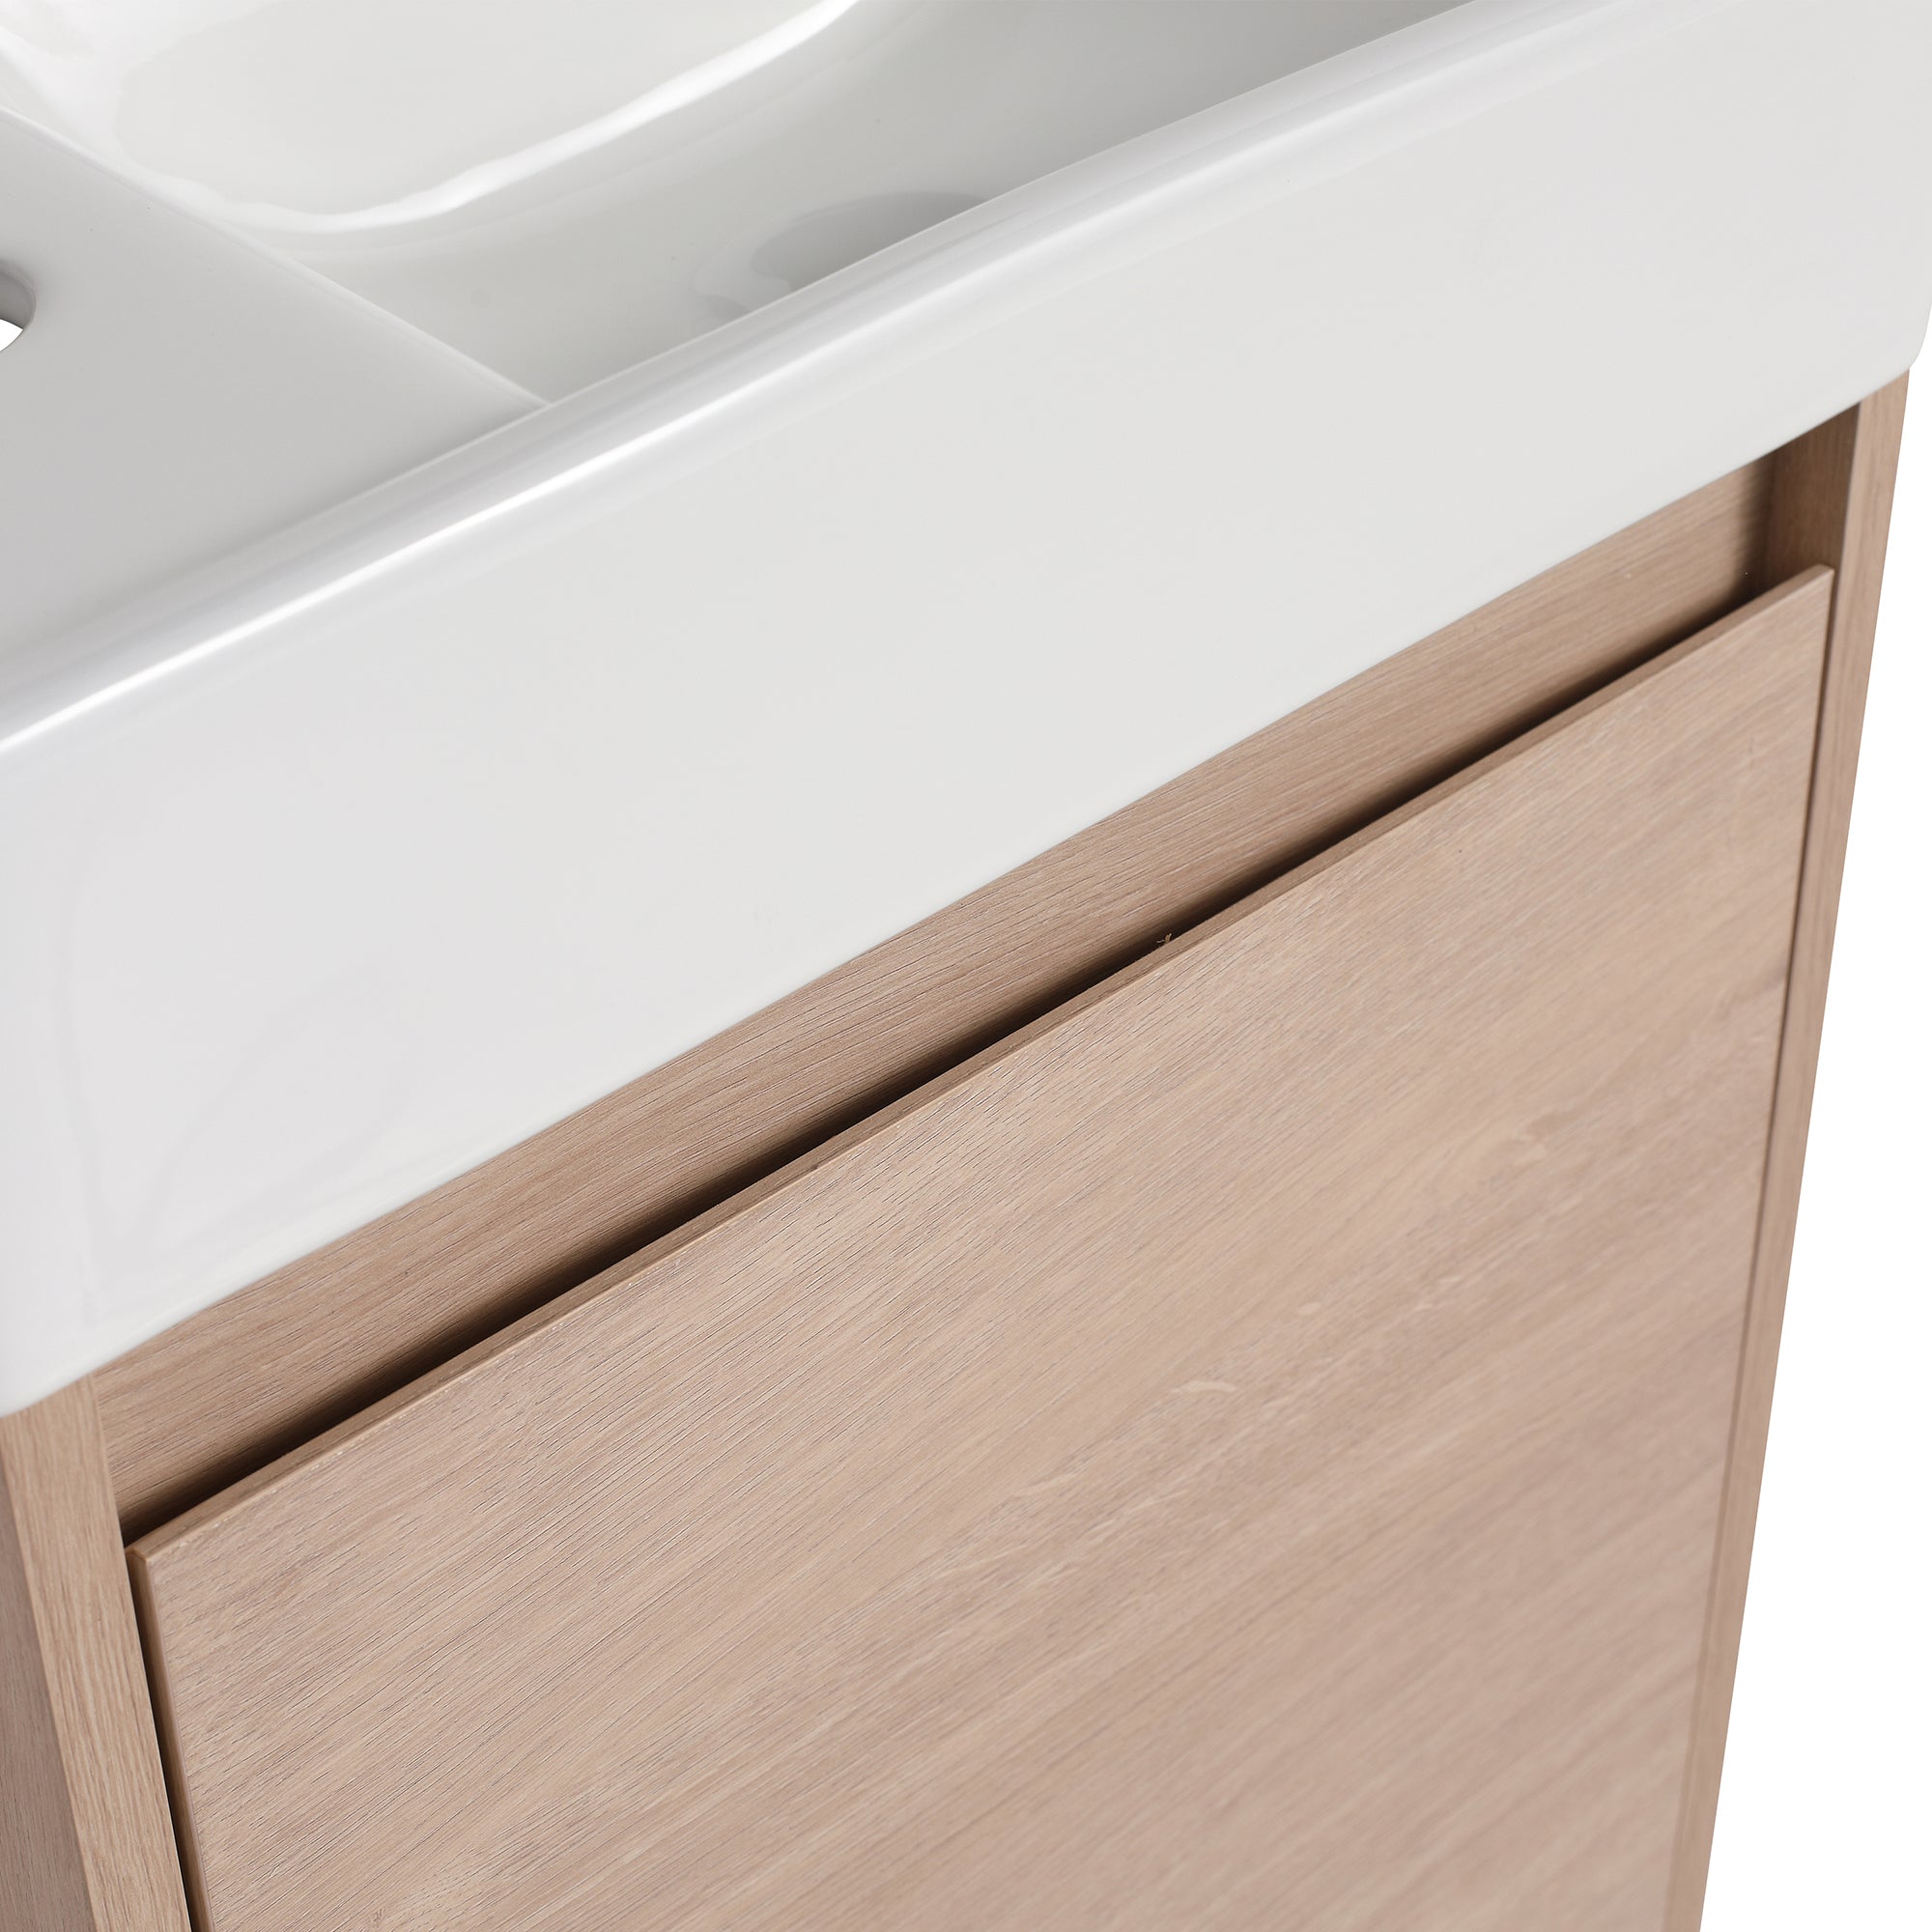 16 in. Plywood Freestanding Bathroom Vanity Set in Plain Light Oak with Integrated Ceramic Sink